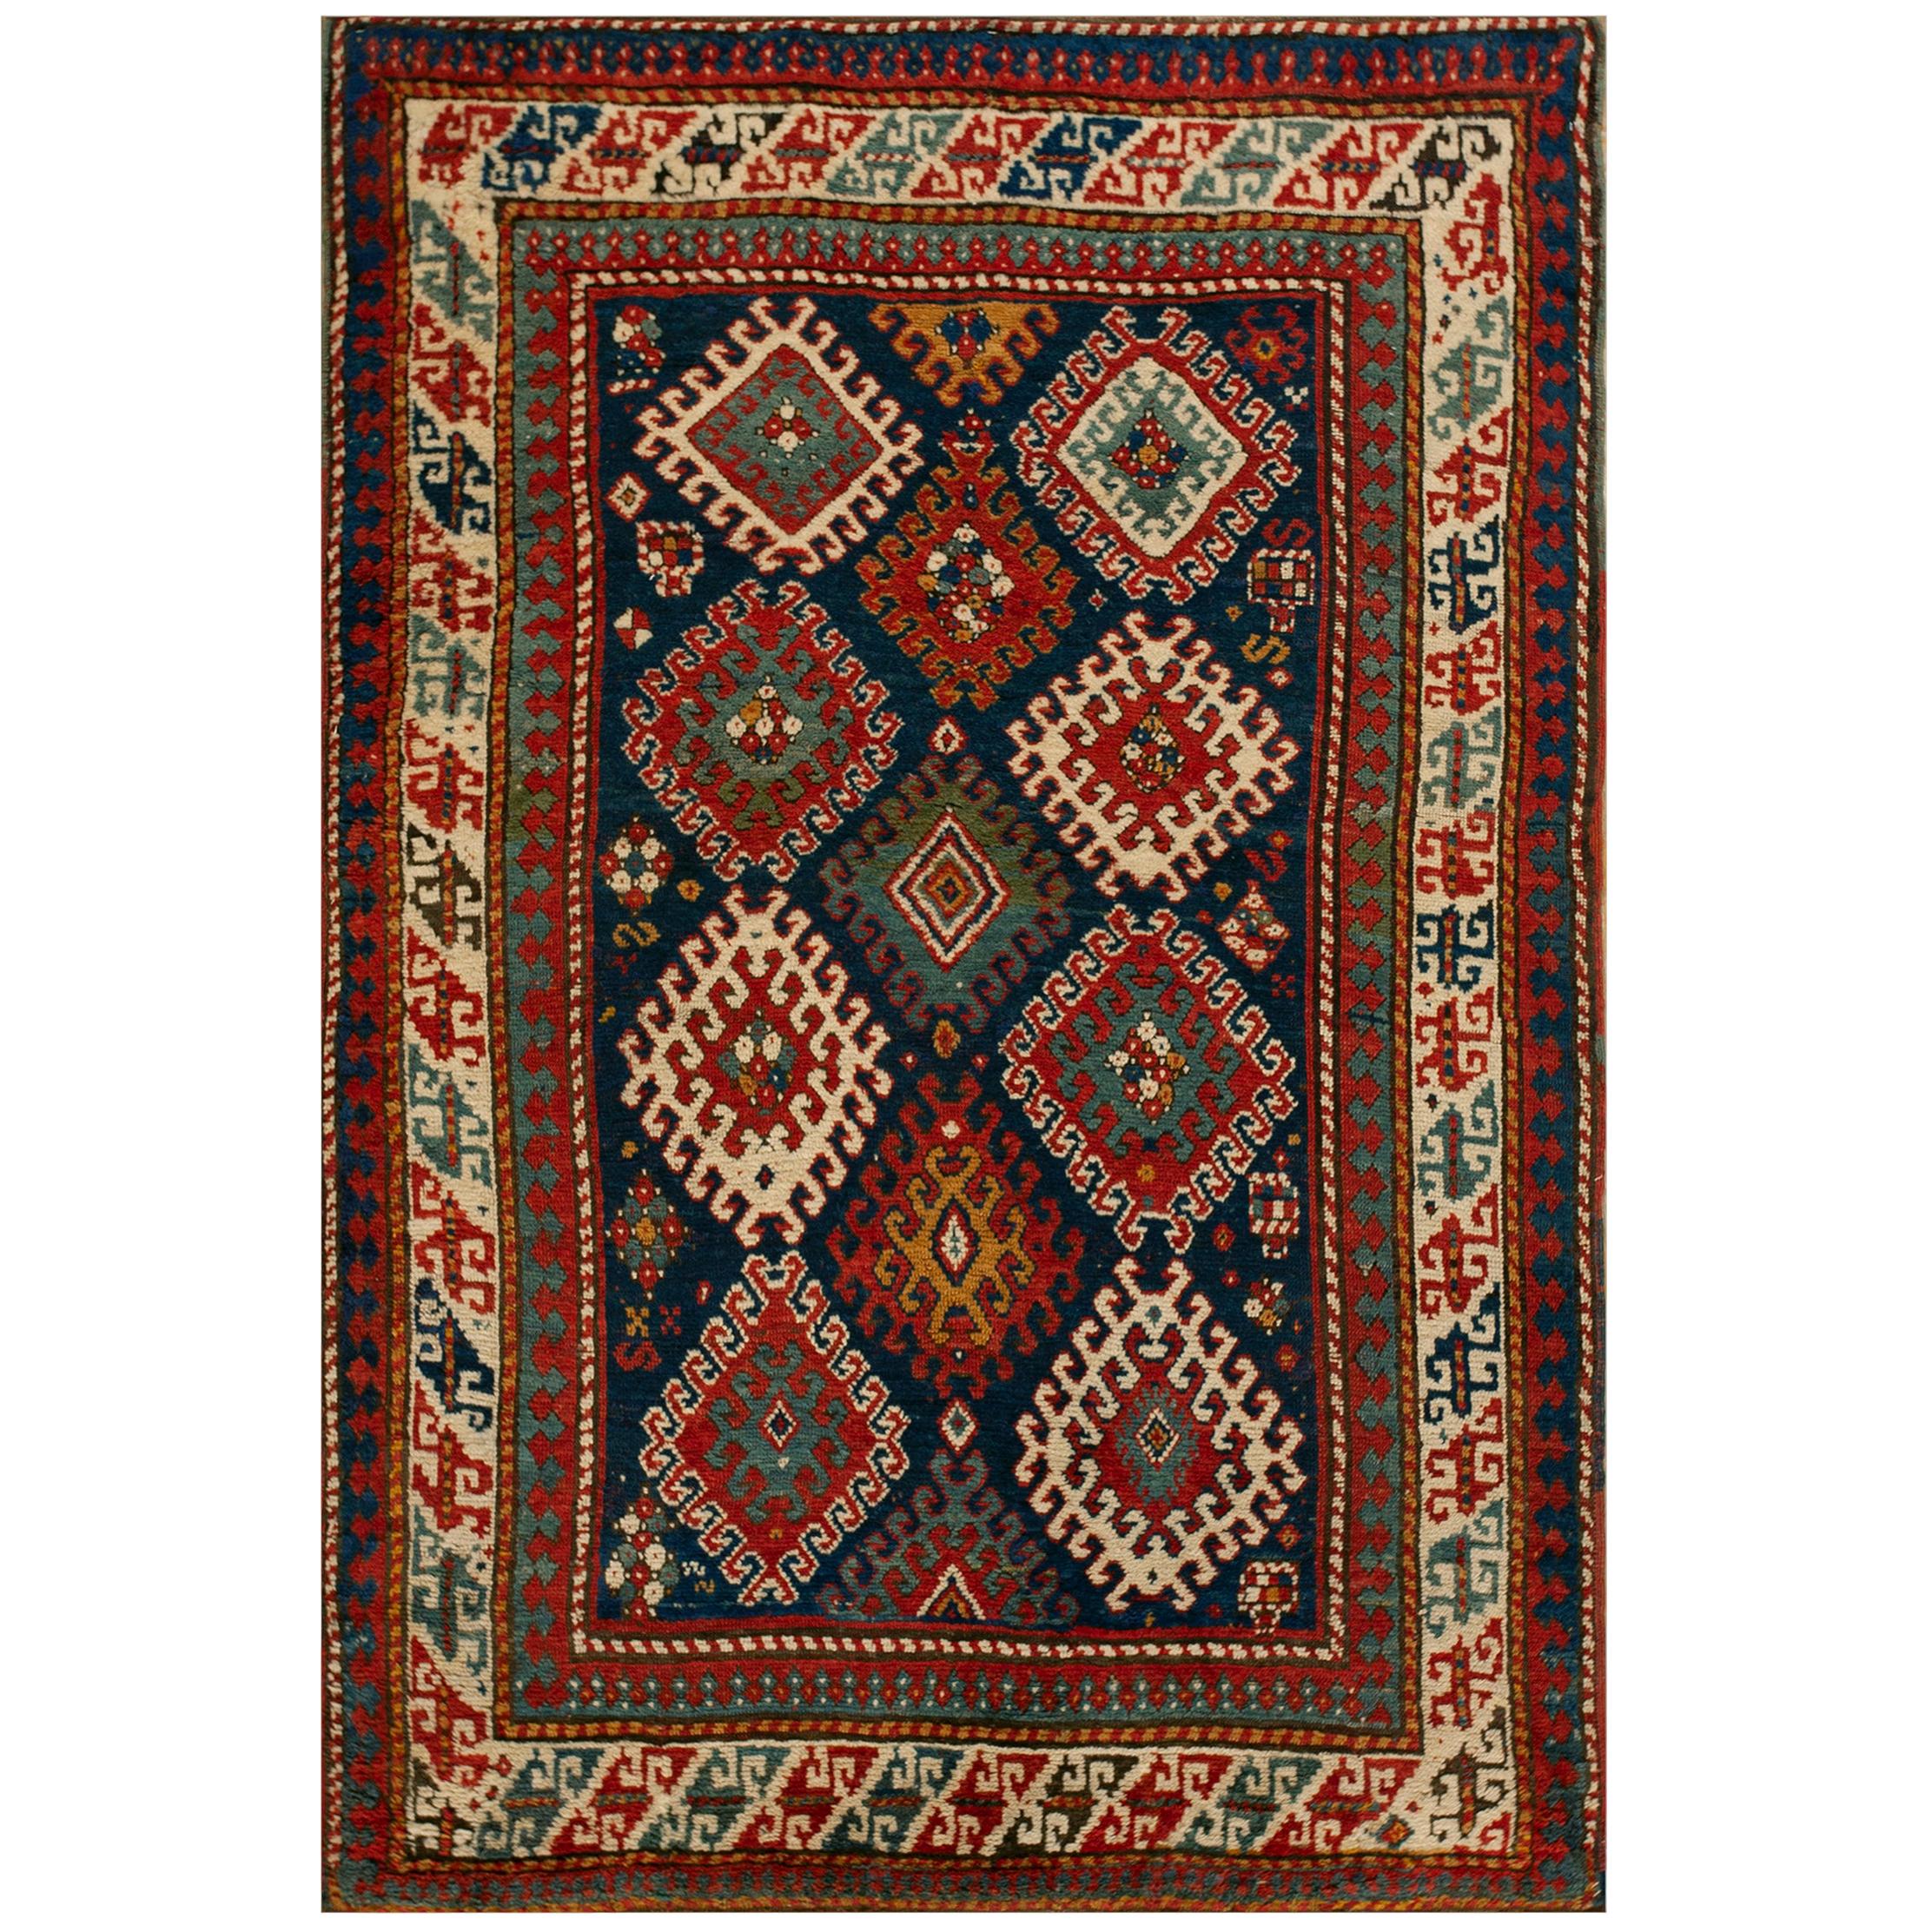 19th Century Caucasian Bordjalou Kazak Carpet ( 4'10" x 7'2" - 147 x 218 ) For Sale